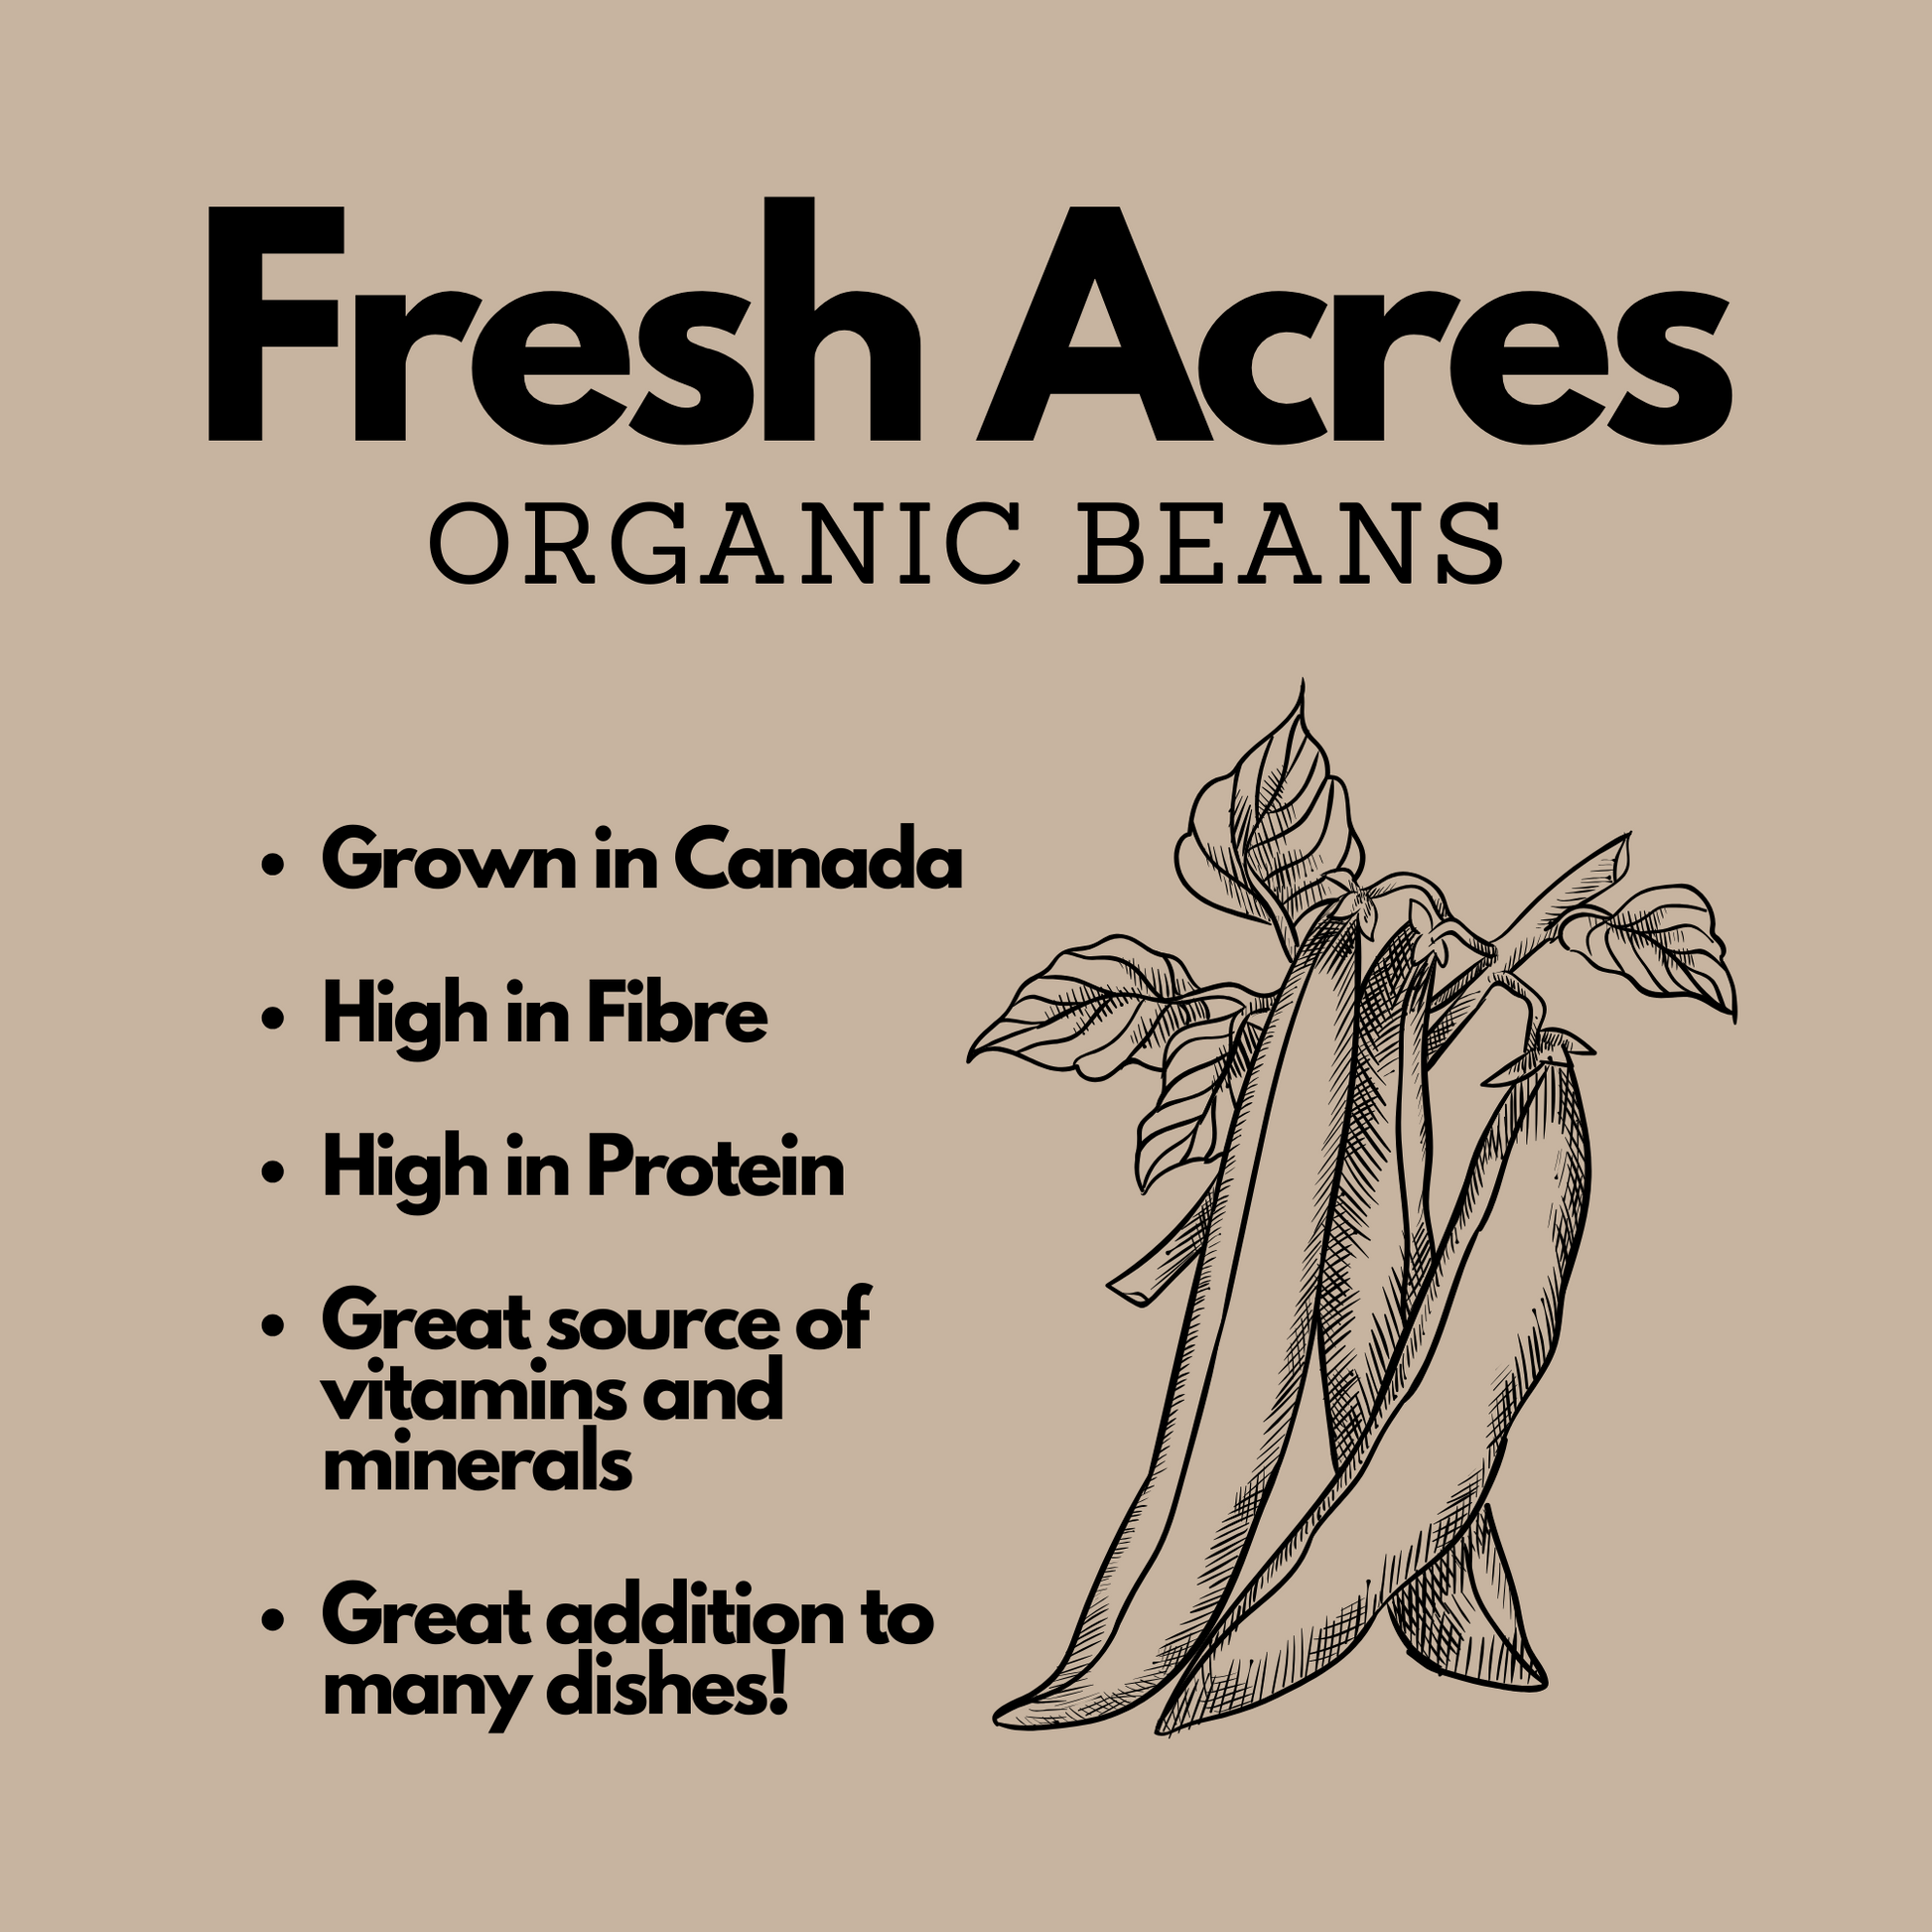 Grown in Ontario Organic Bean Mix